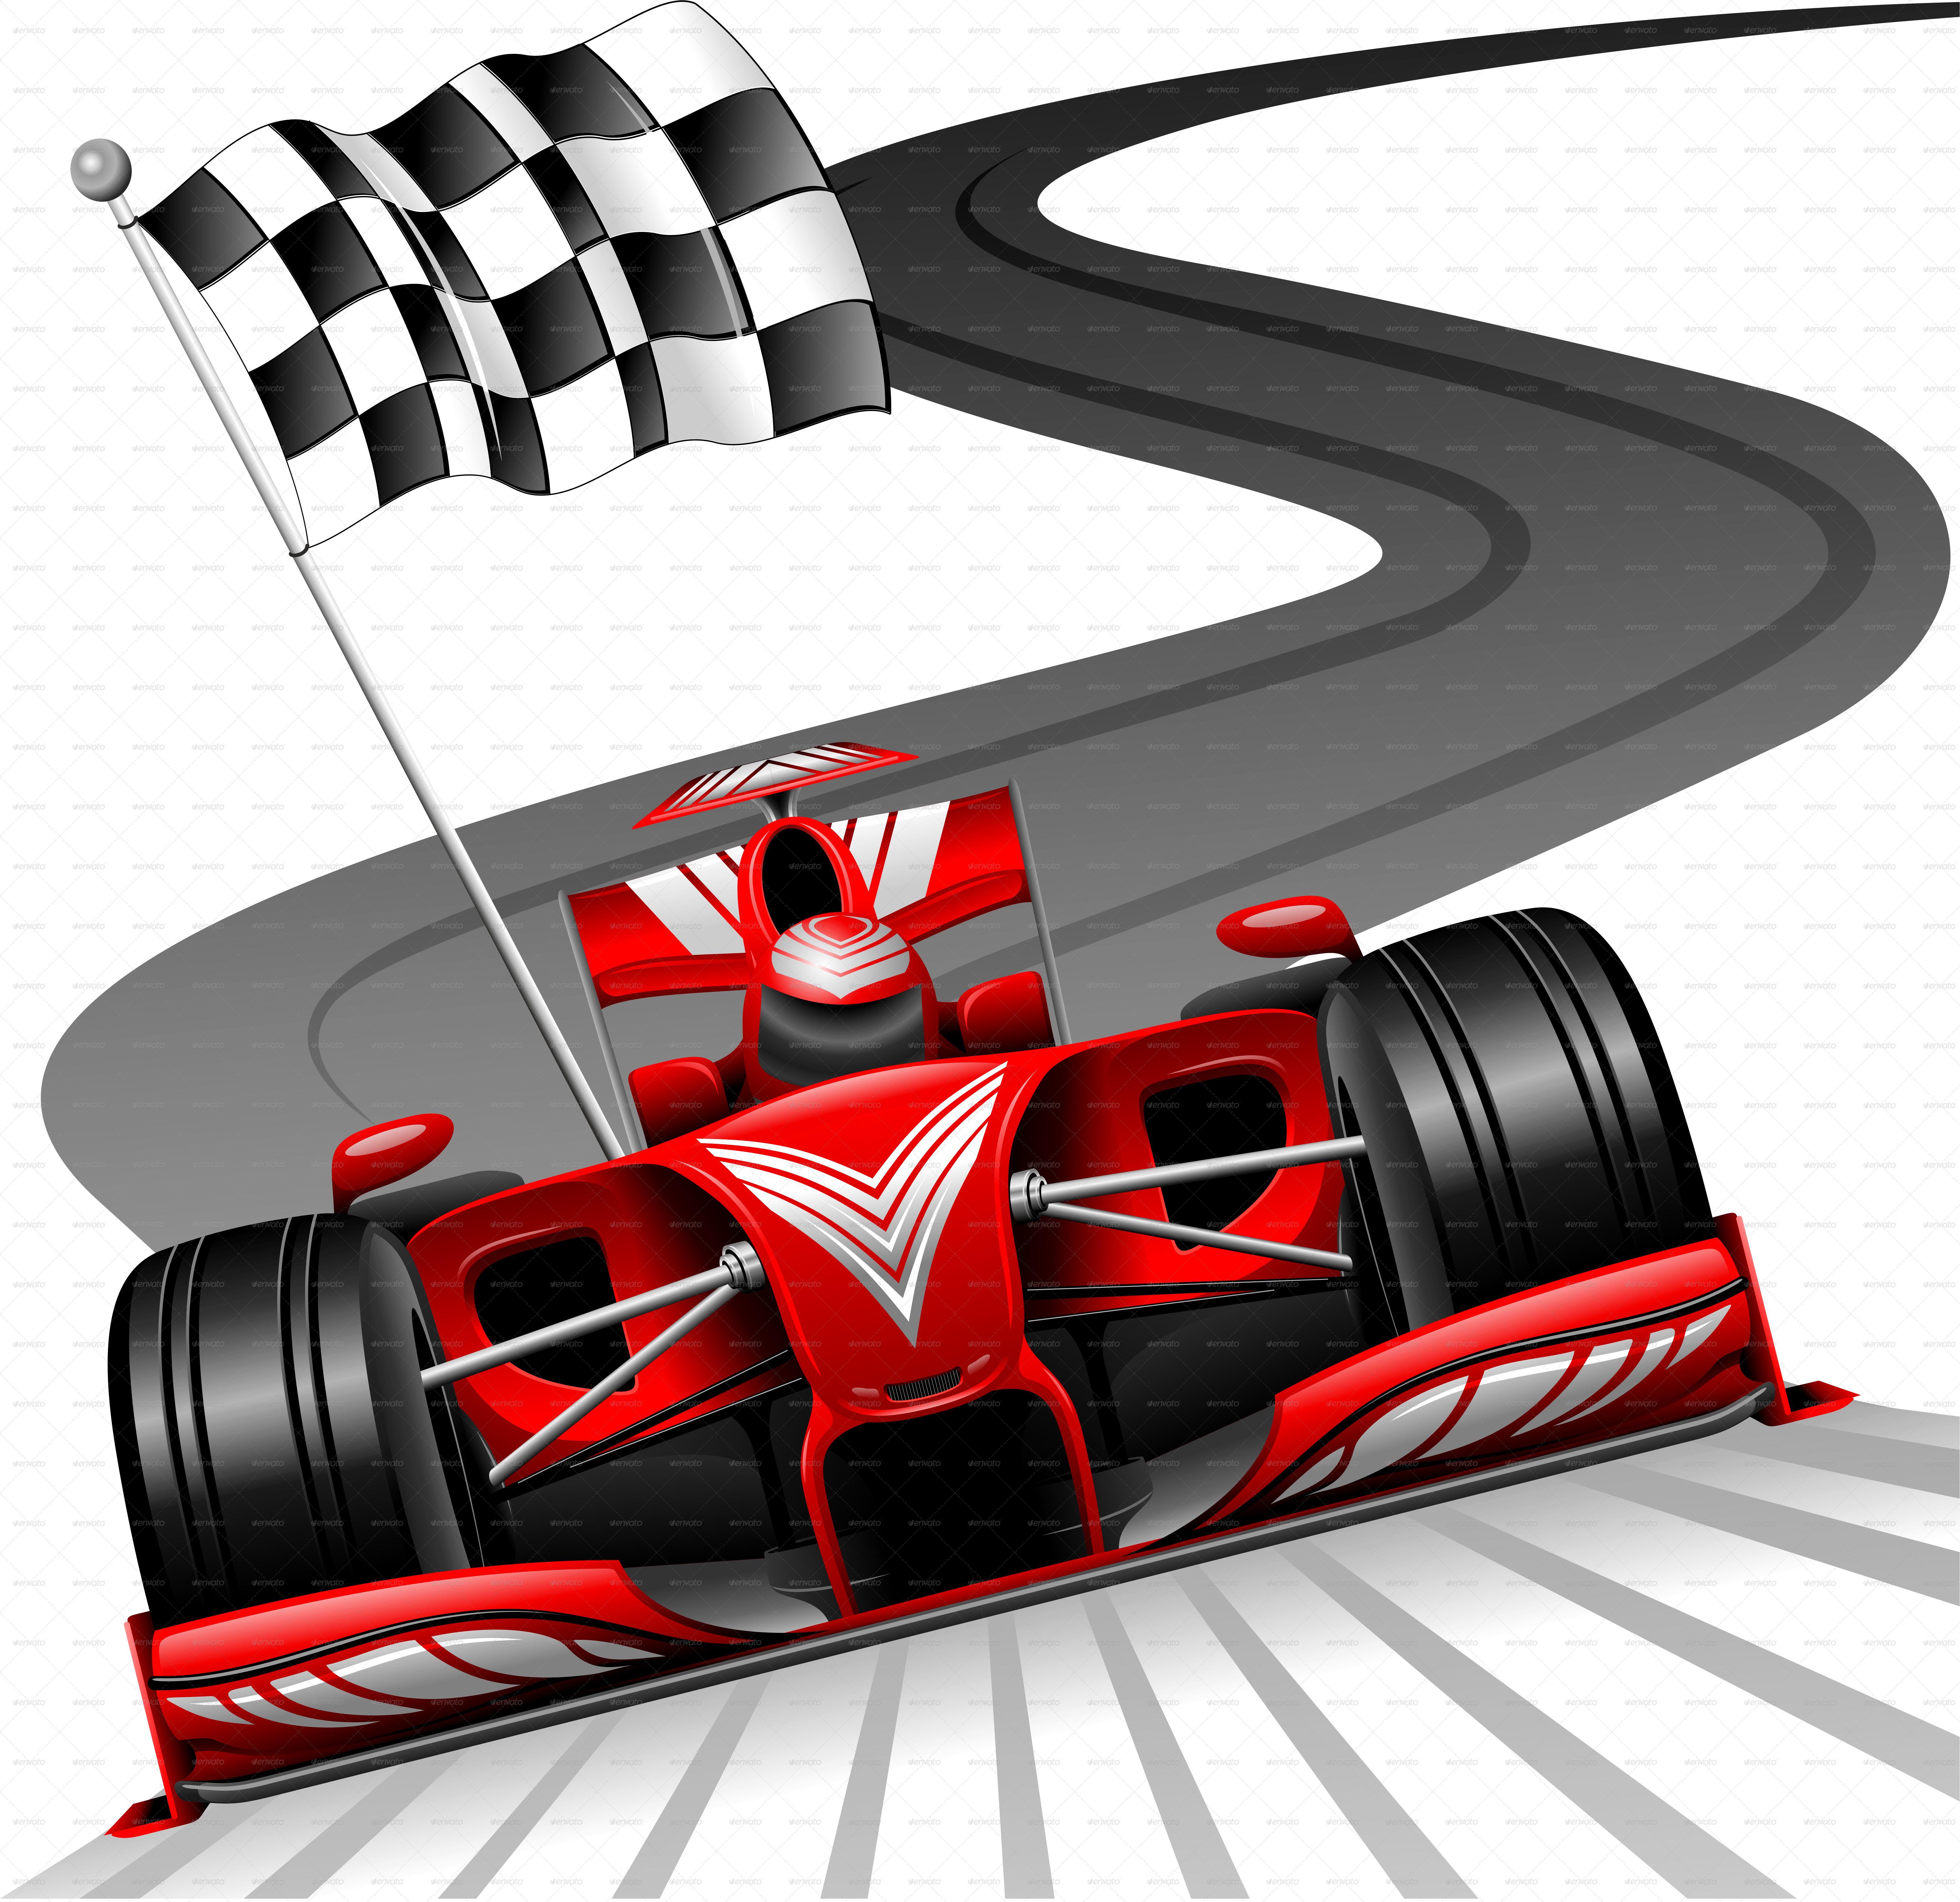 A Race Car With A Checkered Flag